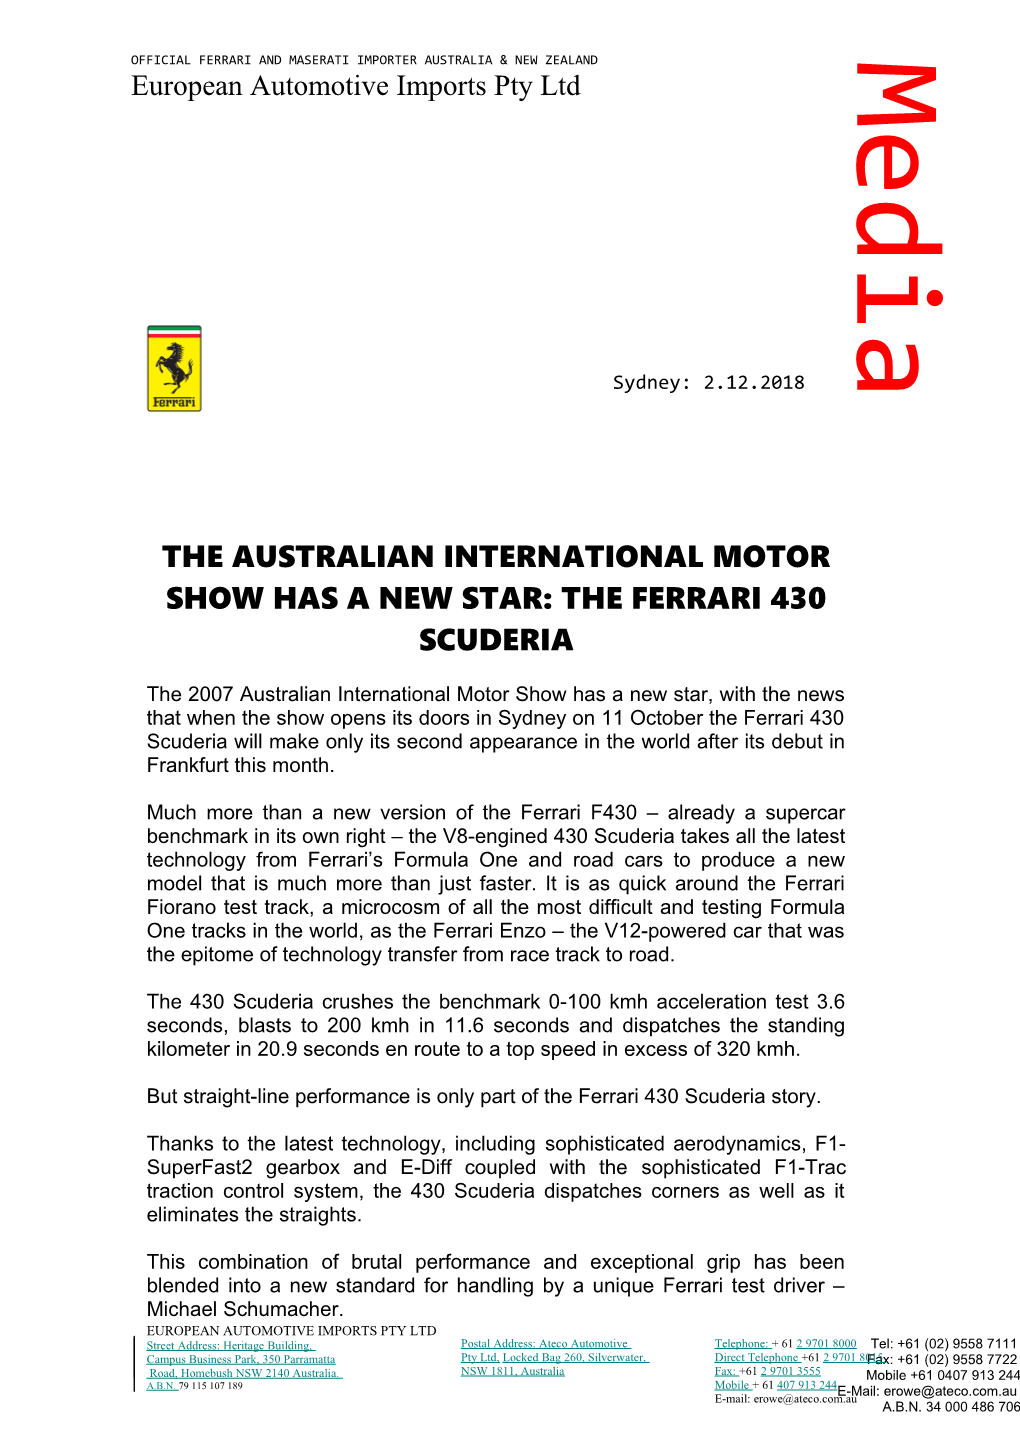 The Australian International Motor Show Has a New Star: the Ferrari 430 Scuderia